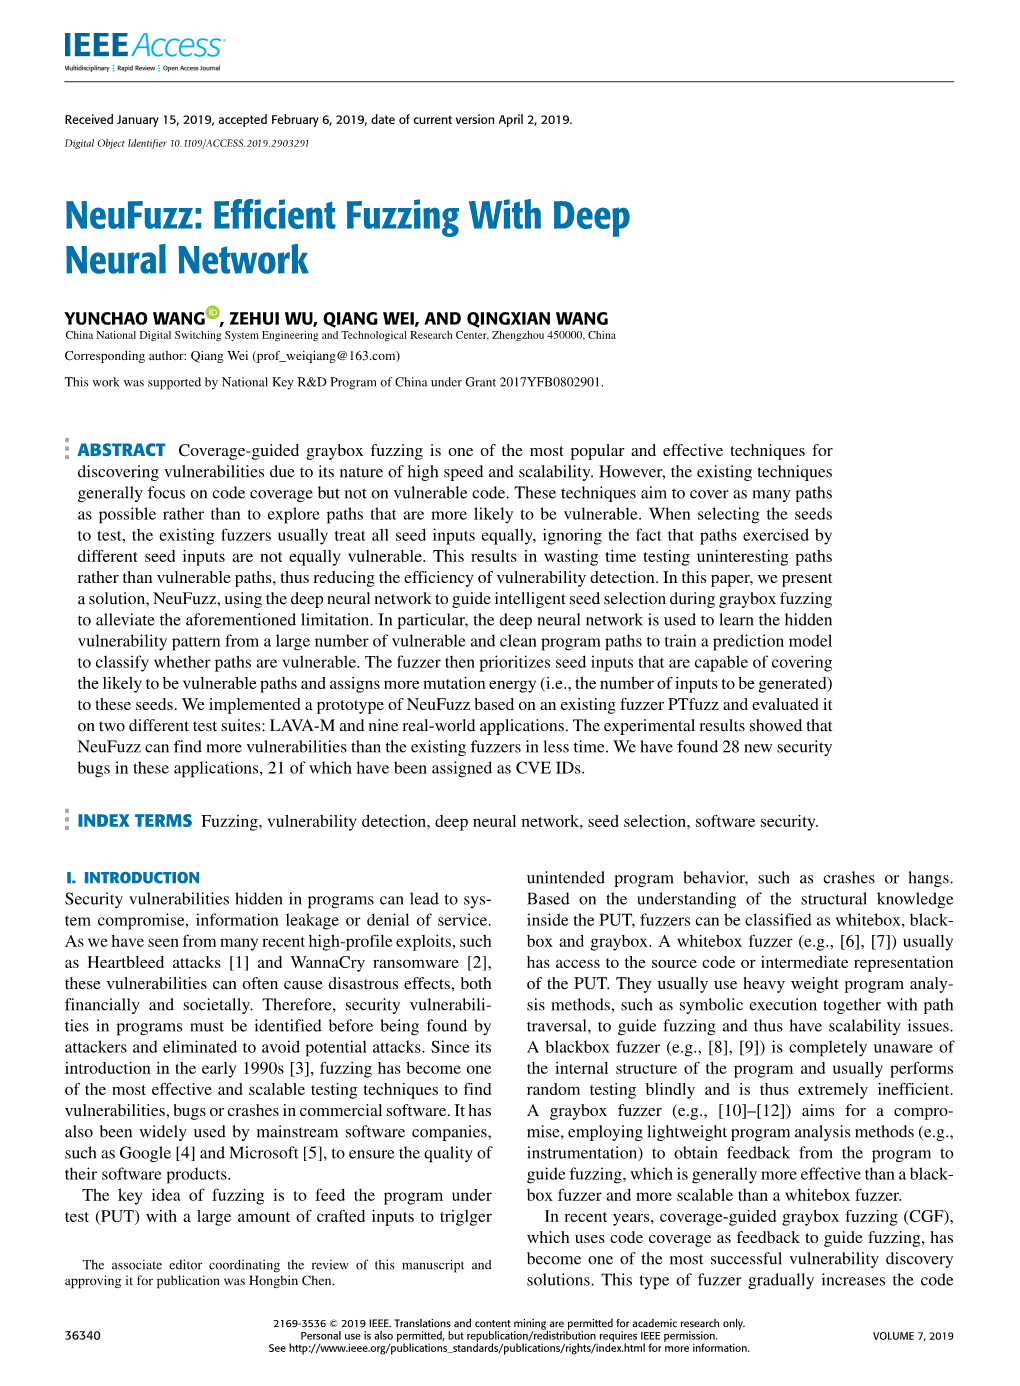 Neufuzz: Efficient Fuzzing with Deep Neural Network